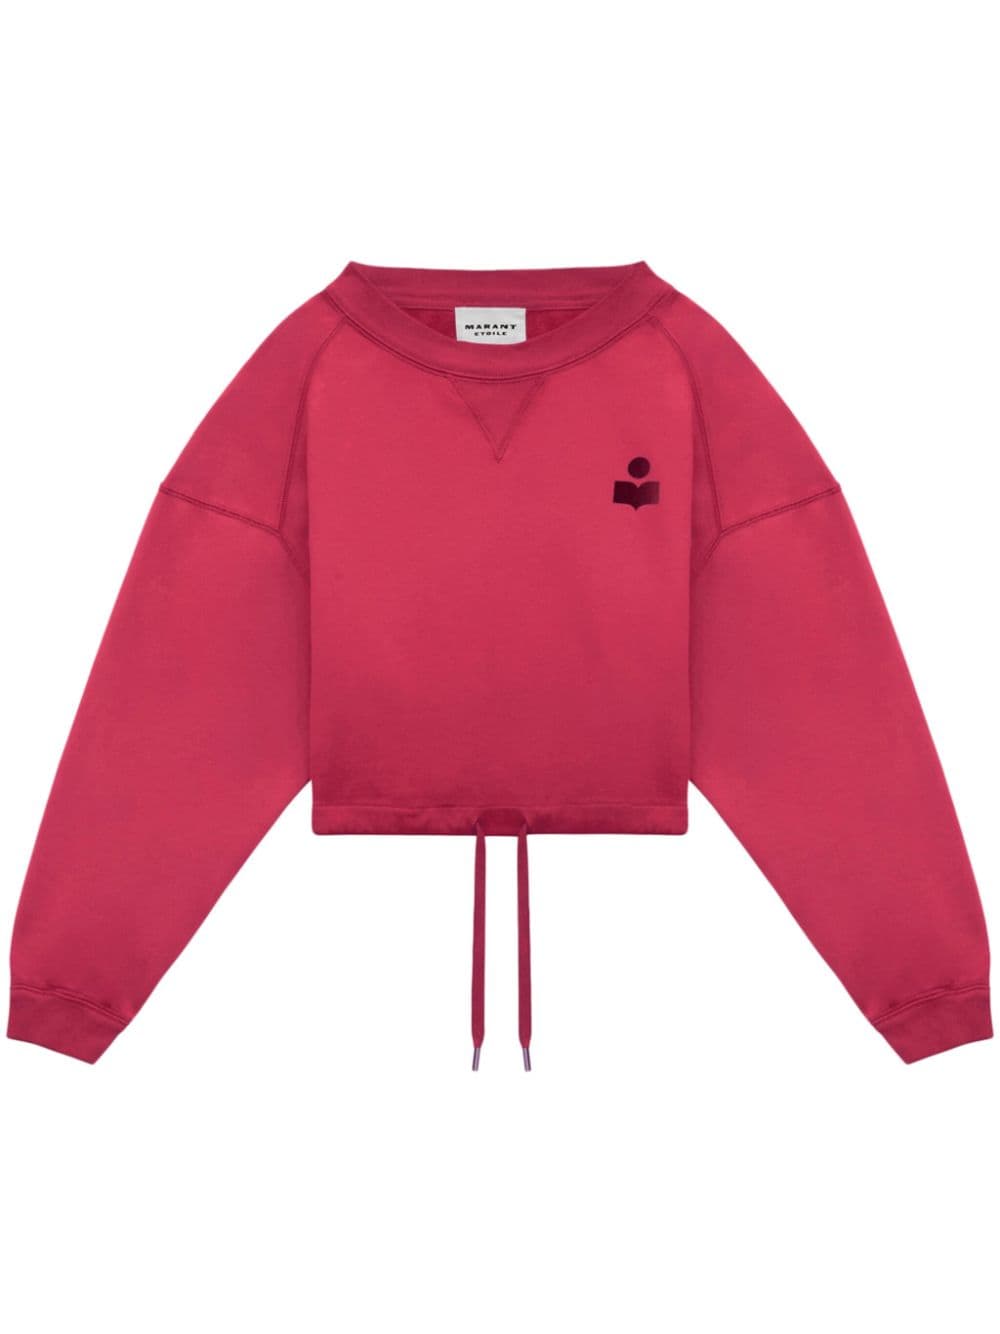 MARANT ÉTOILE logo sweatshirt - Pink von MARANT ÉTOILE